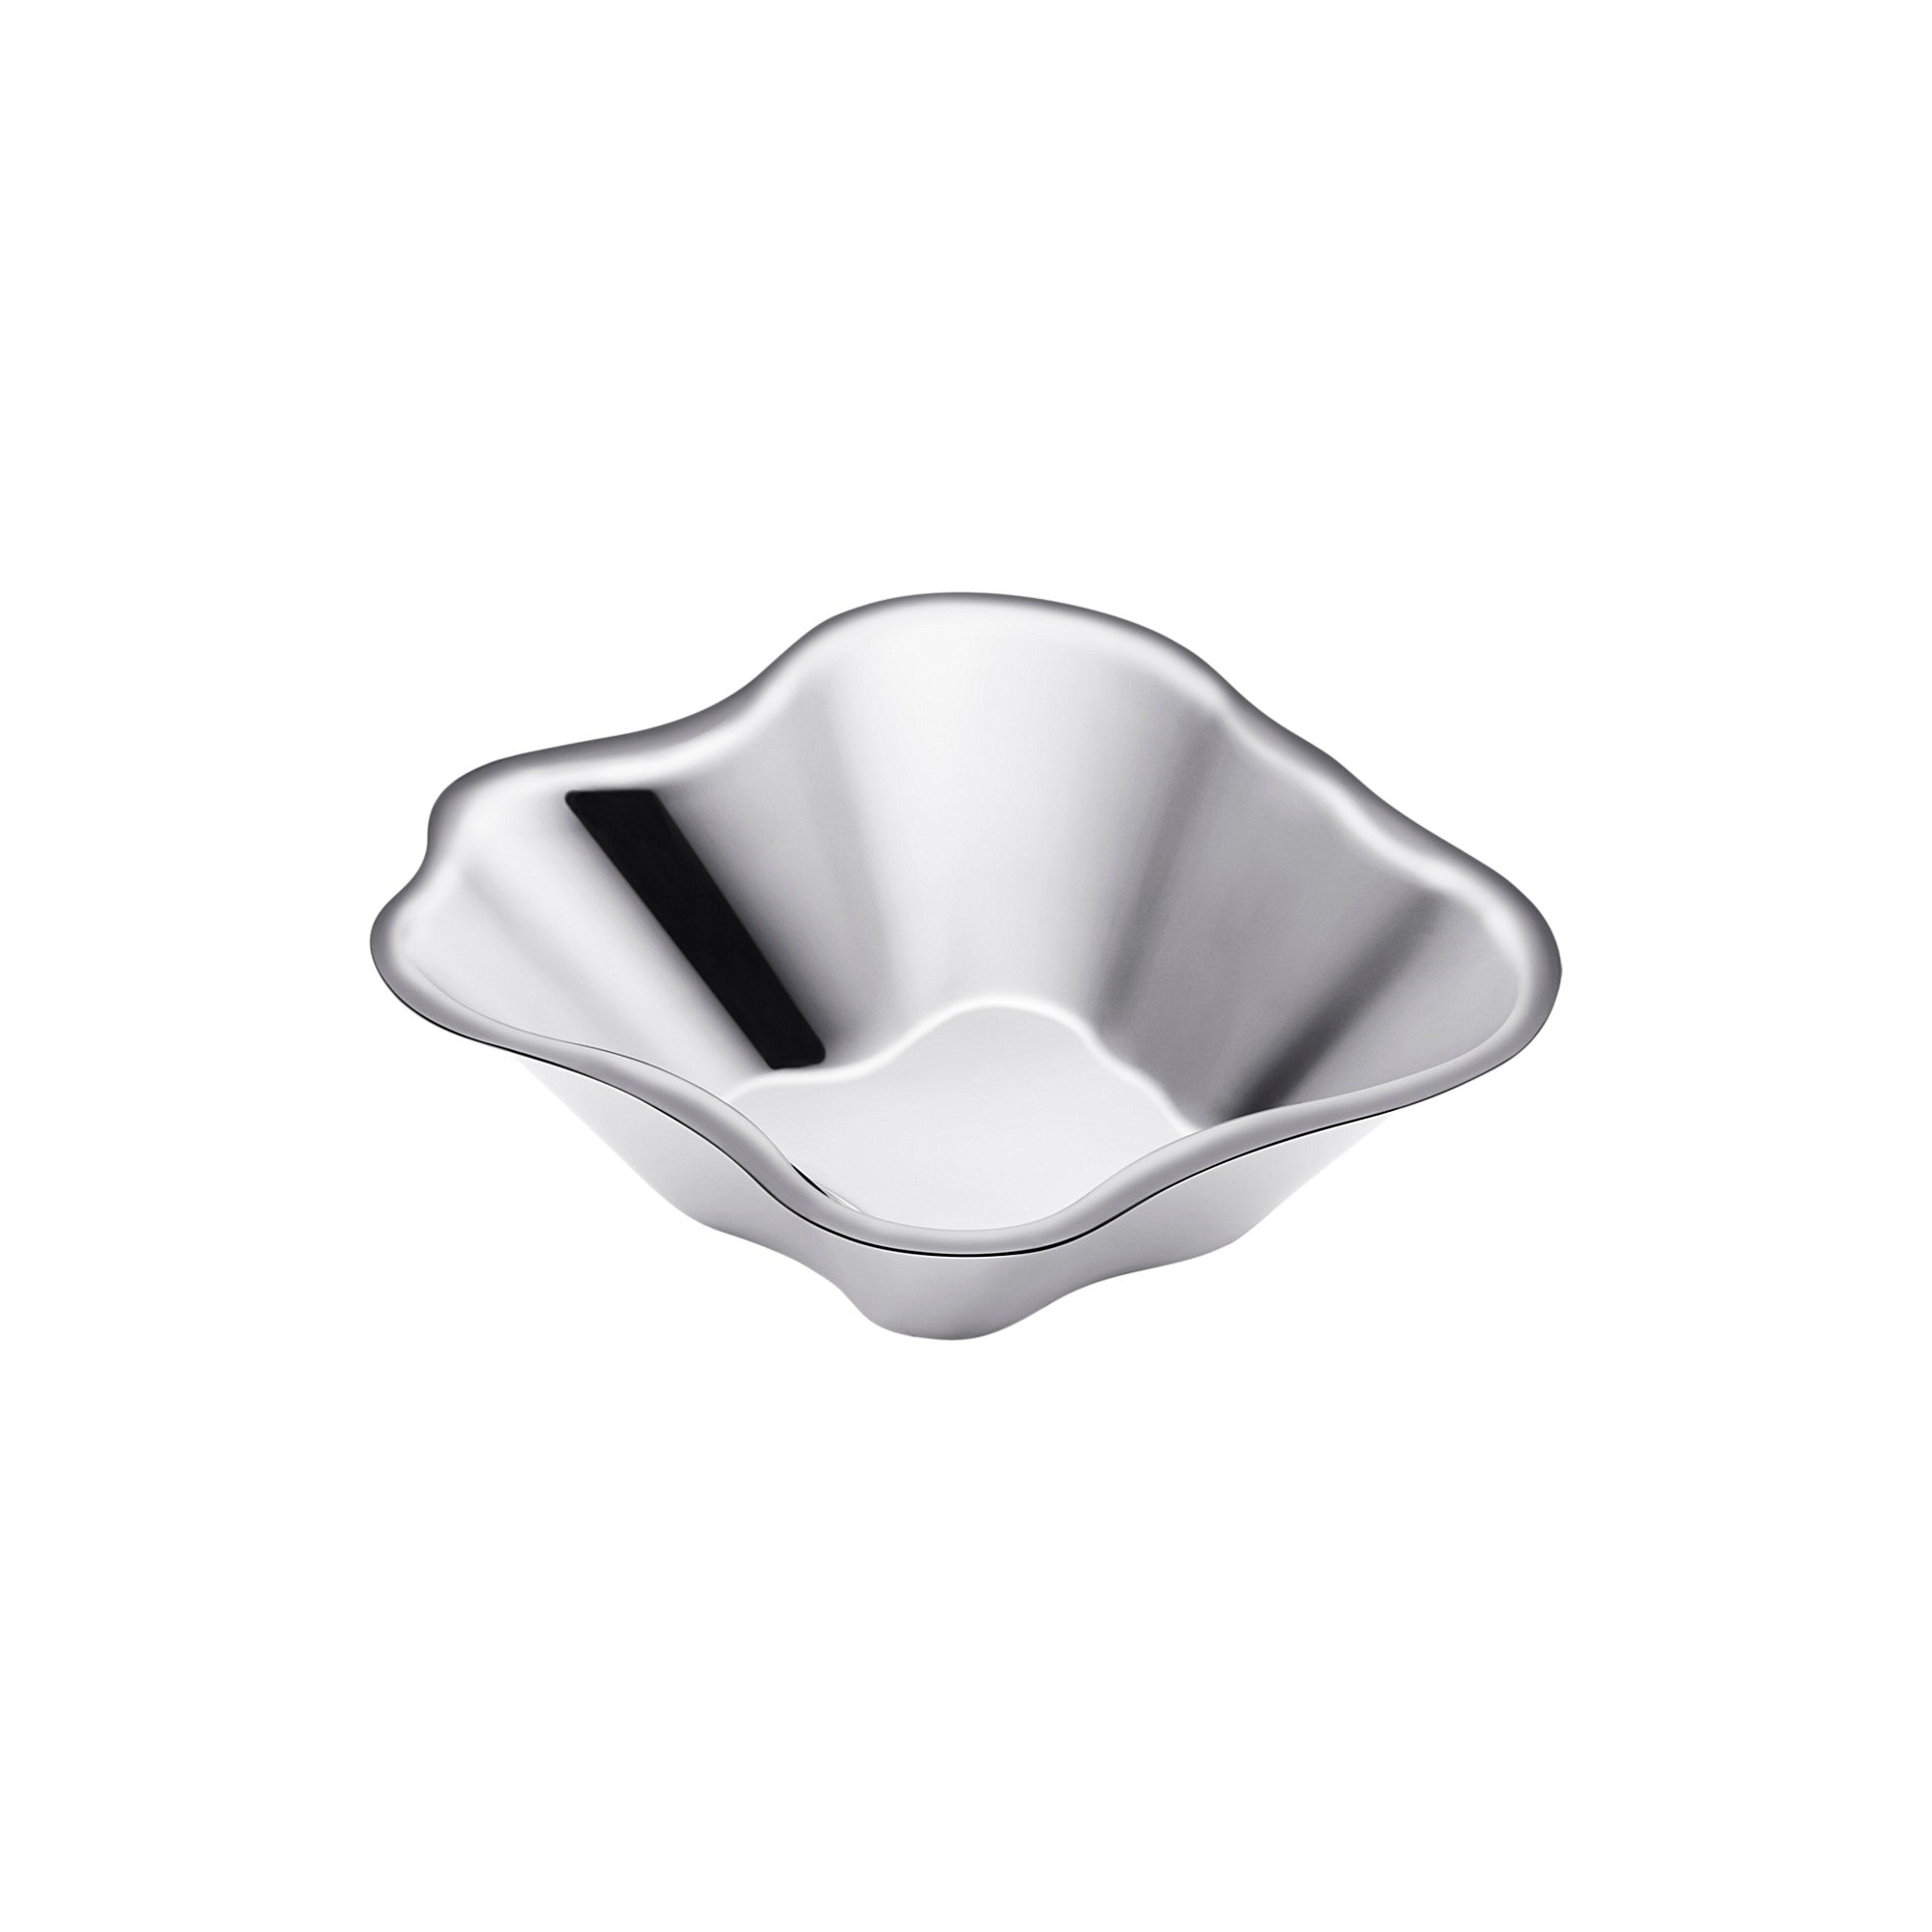 Iittala Serving Bowls Stainless Steel Alvar Aalto